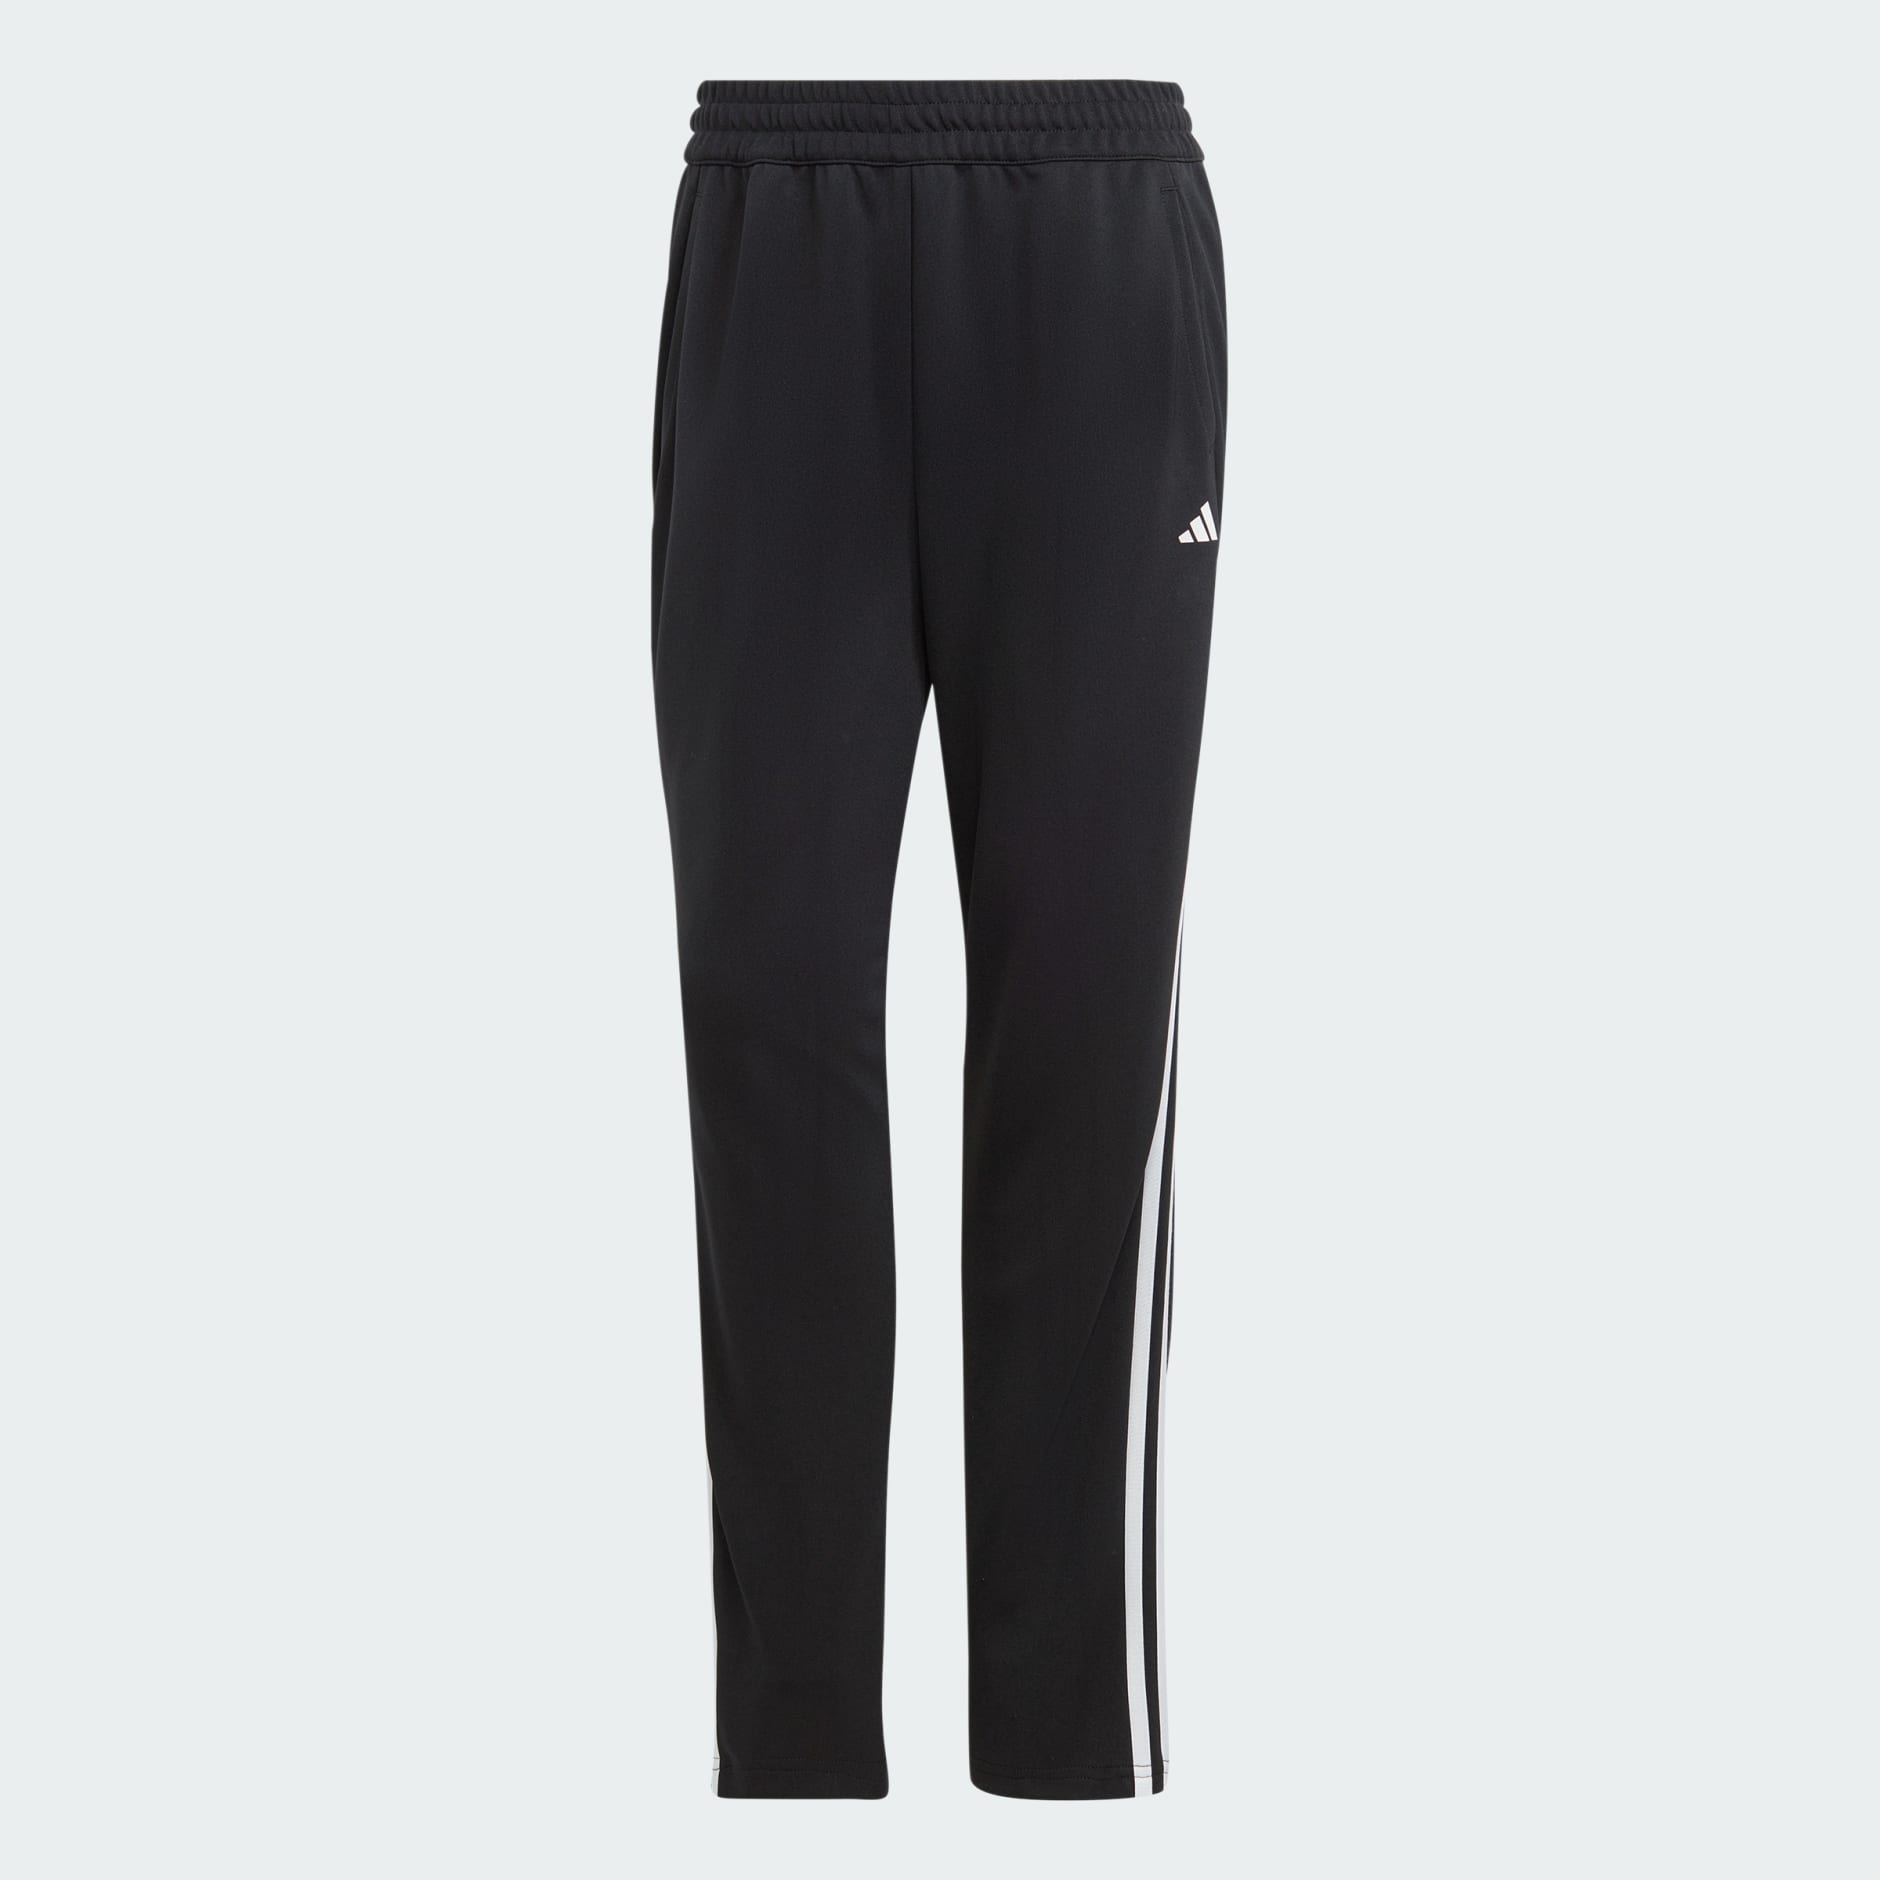 Women's Clothing - AEROREADY Train Essentials 3-Stripes Pants - Black |  adidas Oman